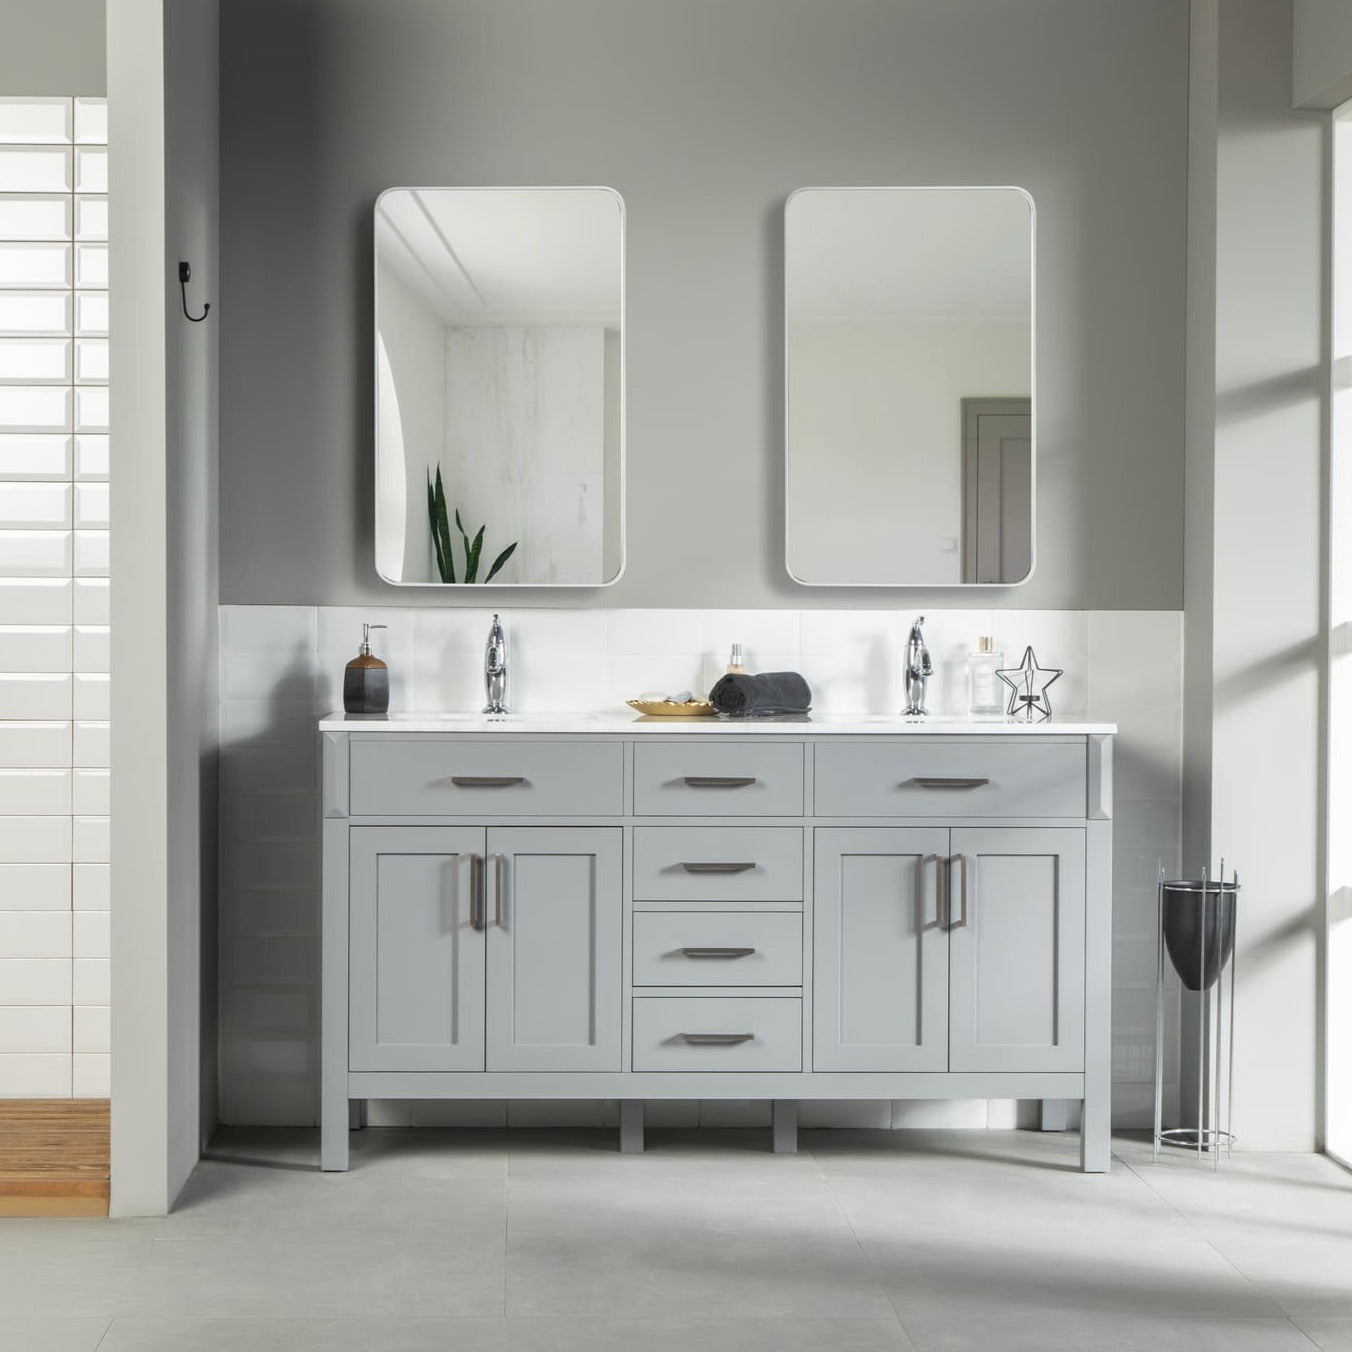 Fawna Bathroom Vanity Homelero 60"  #size_60"  #color_grey  #hardware_brushed nickel